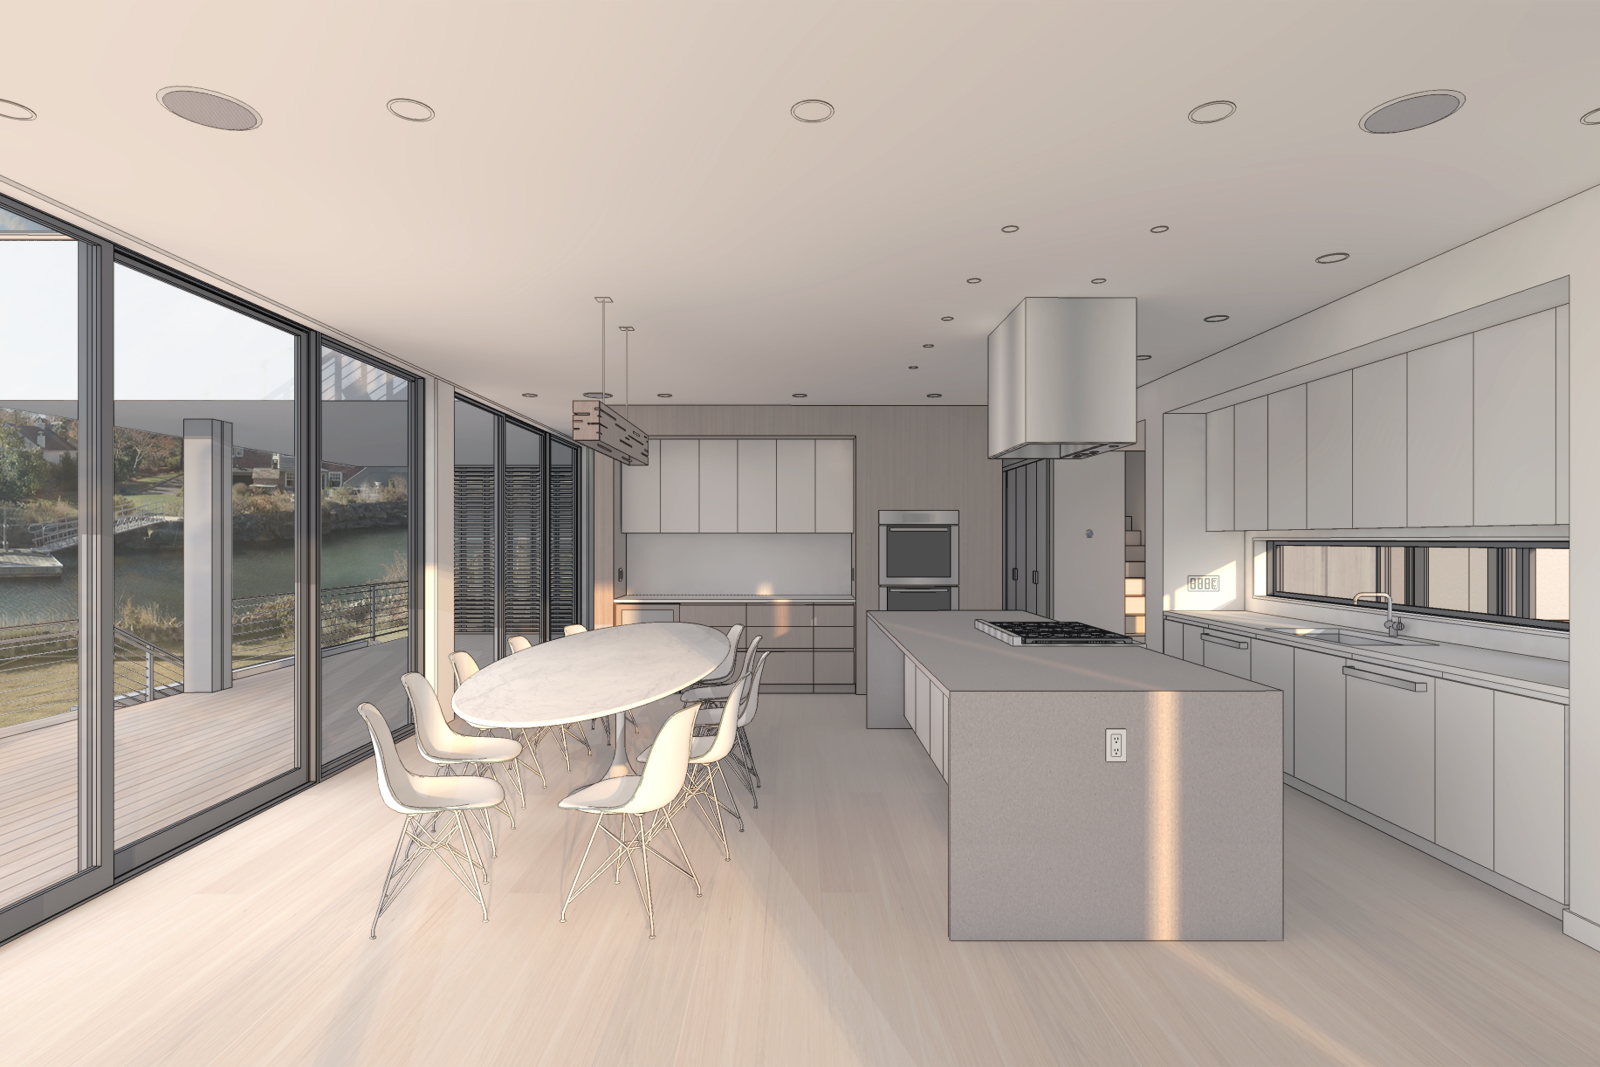 04-res4-resolution-4-architecture-modern-modular-prefab-douglas-lane-house-interior-dining-kitchen-rendering.jpg